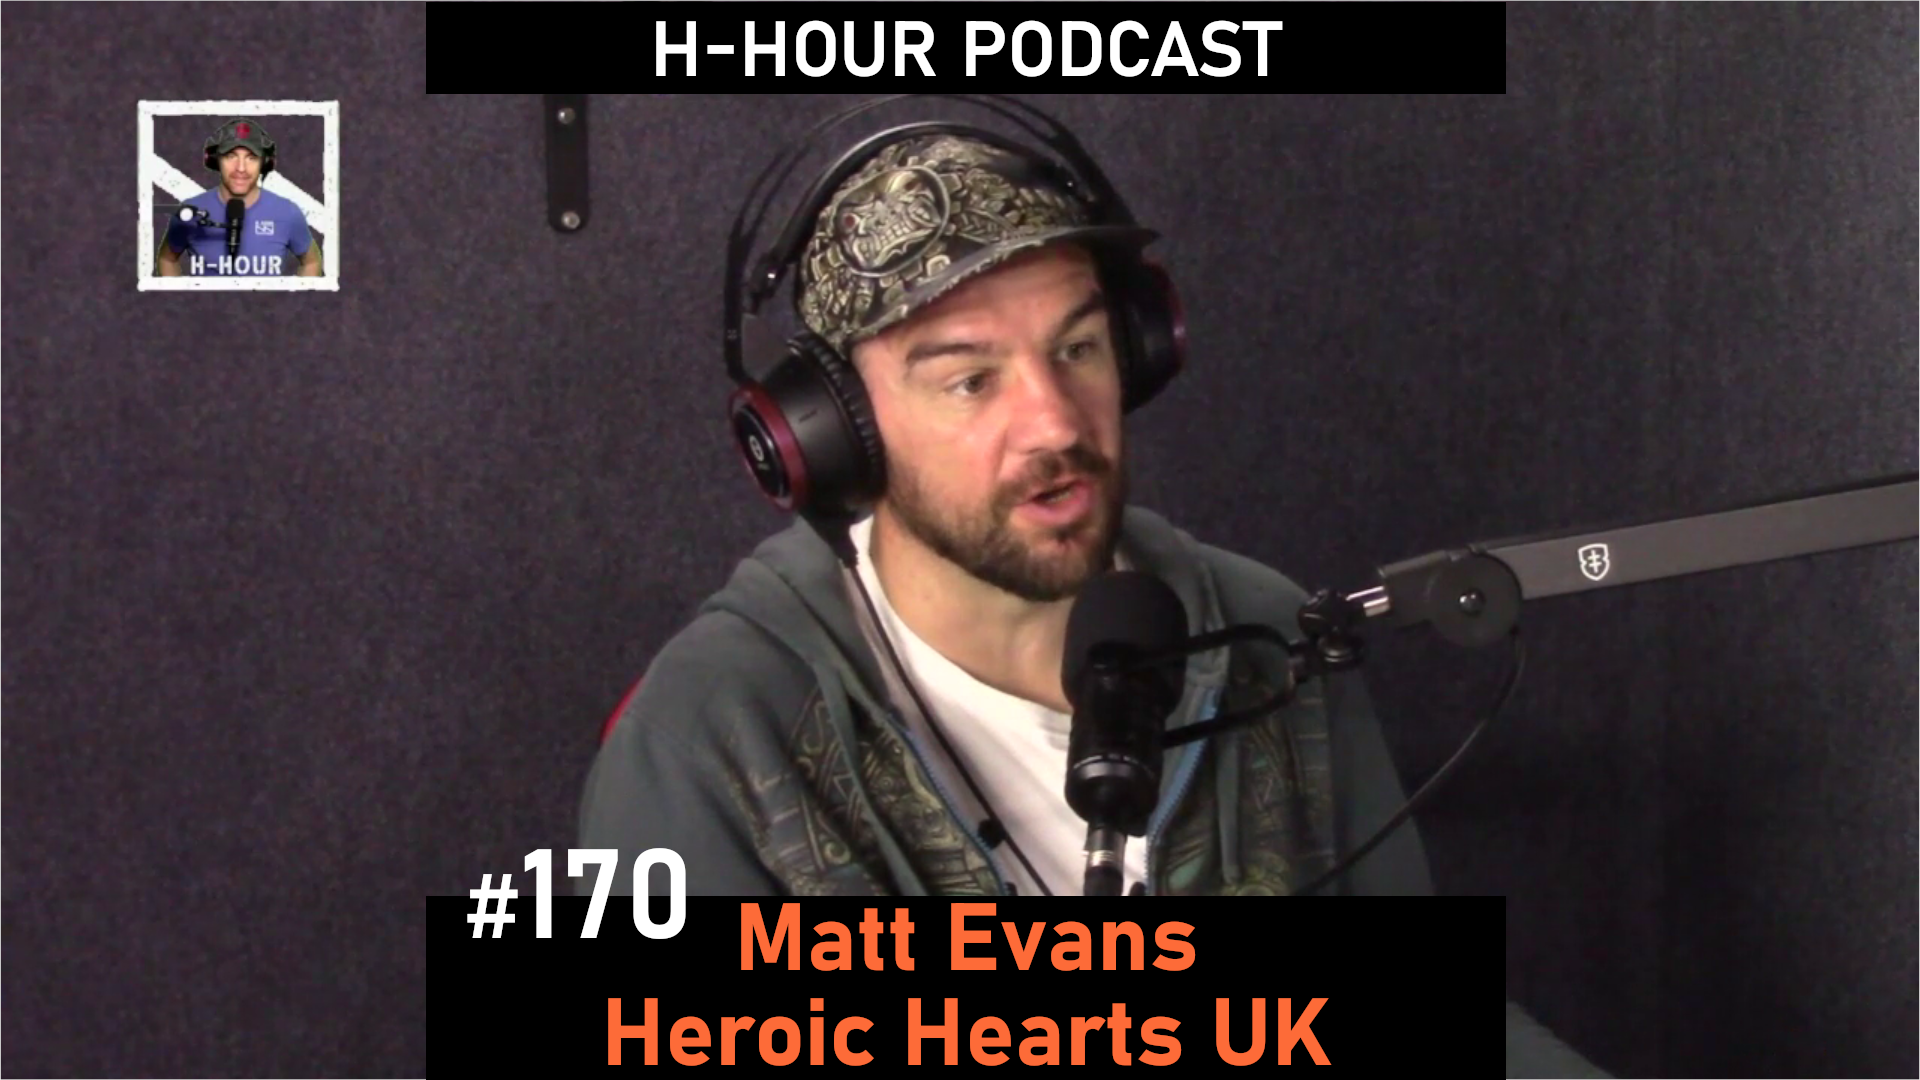 H-Hour Podcast #170 Matt Evans - former fighter, plant medicine advocate